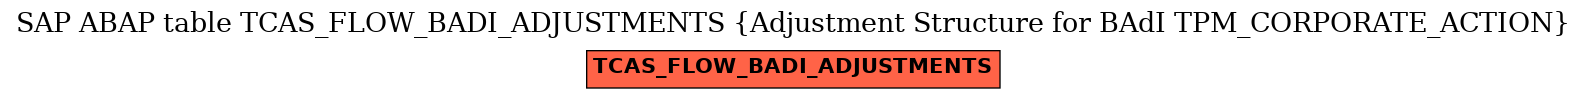 E-R Diagram for table TCAS_FLOW_BADI_ADJUSTMENTS (Adjustment Structure for BAdI TPM_CORPORATE_ACTION)